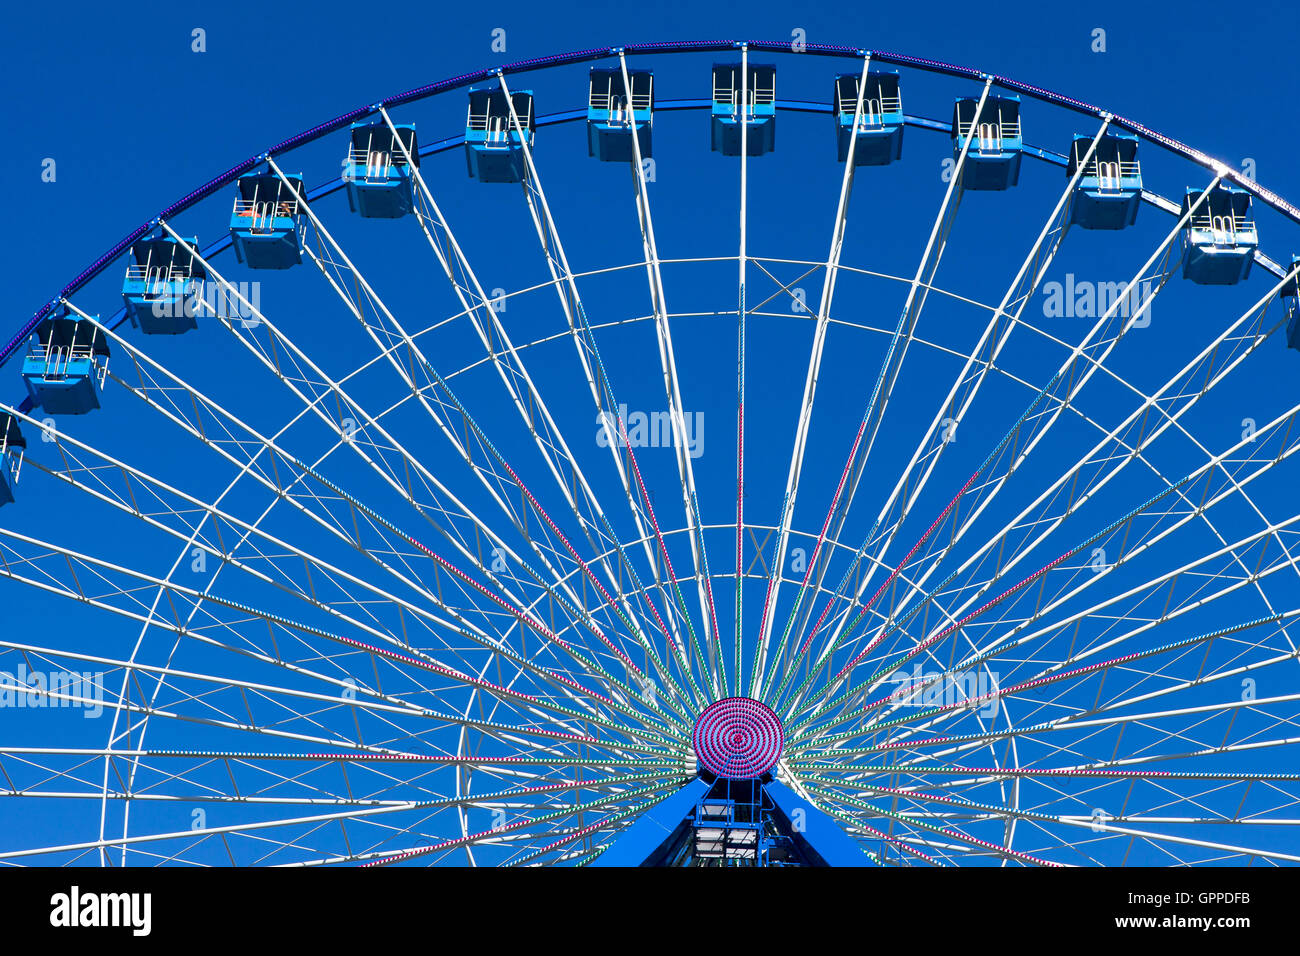 Ruota panoramica Ferris con cielo blu in background Foto Stock